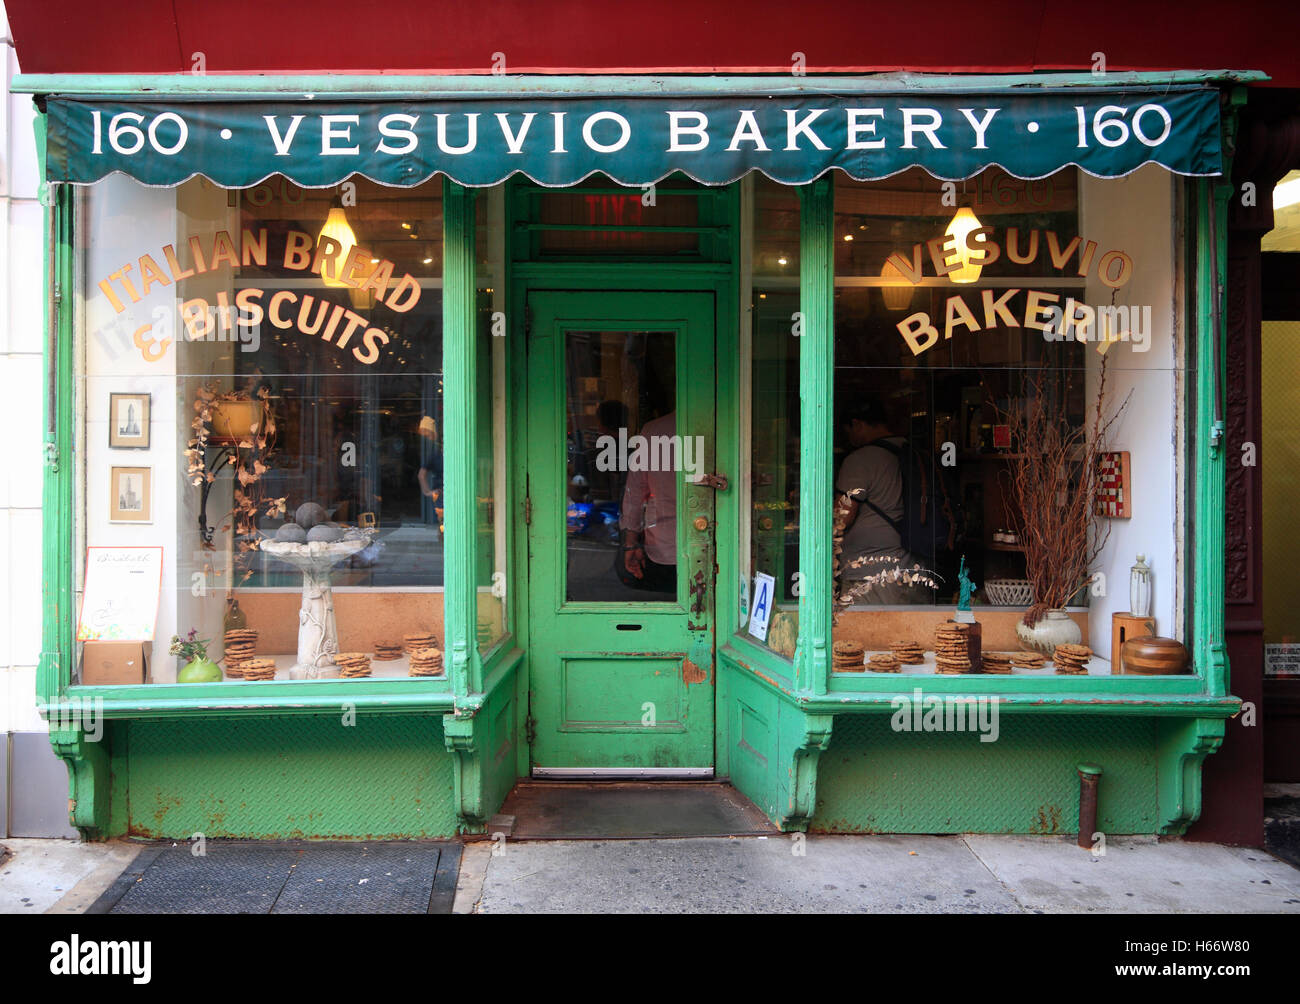 VESUVIO BAKERY from 1920, 160 Prince Street,  Little Italy, New York, USA Stock Photo